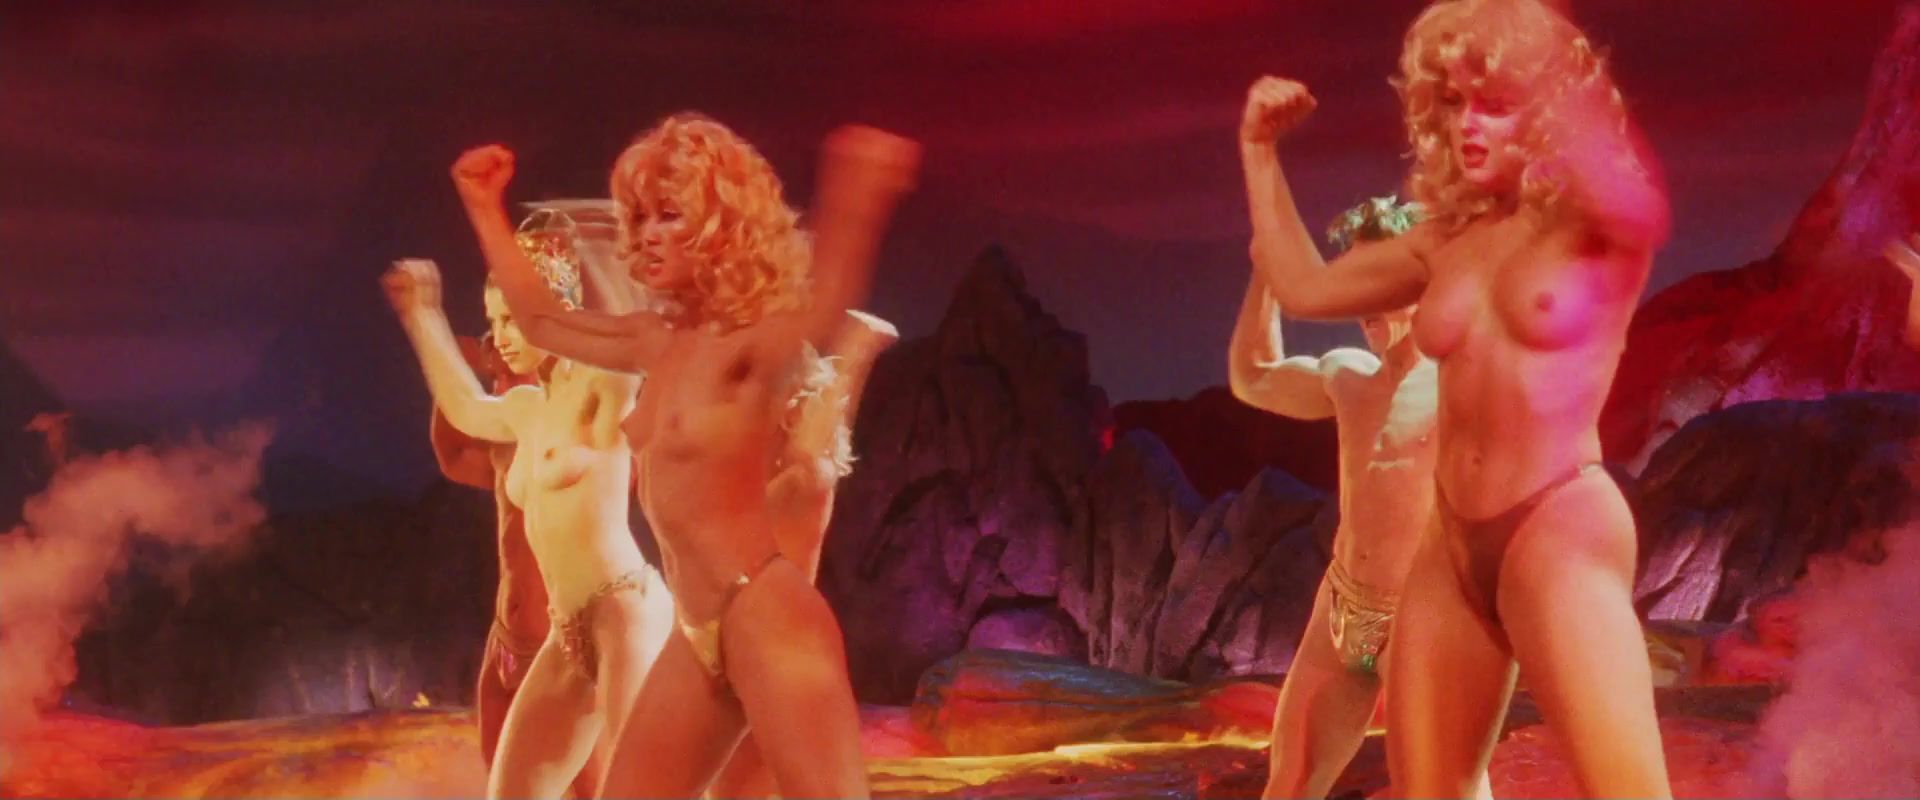 Free Hardcore Best Striptease Scenes from Movies: Gina Gershon, Elizabeth Berkley - Showgirls (1995) Amazon - 1